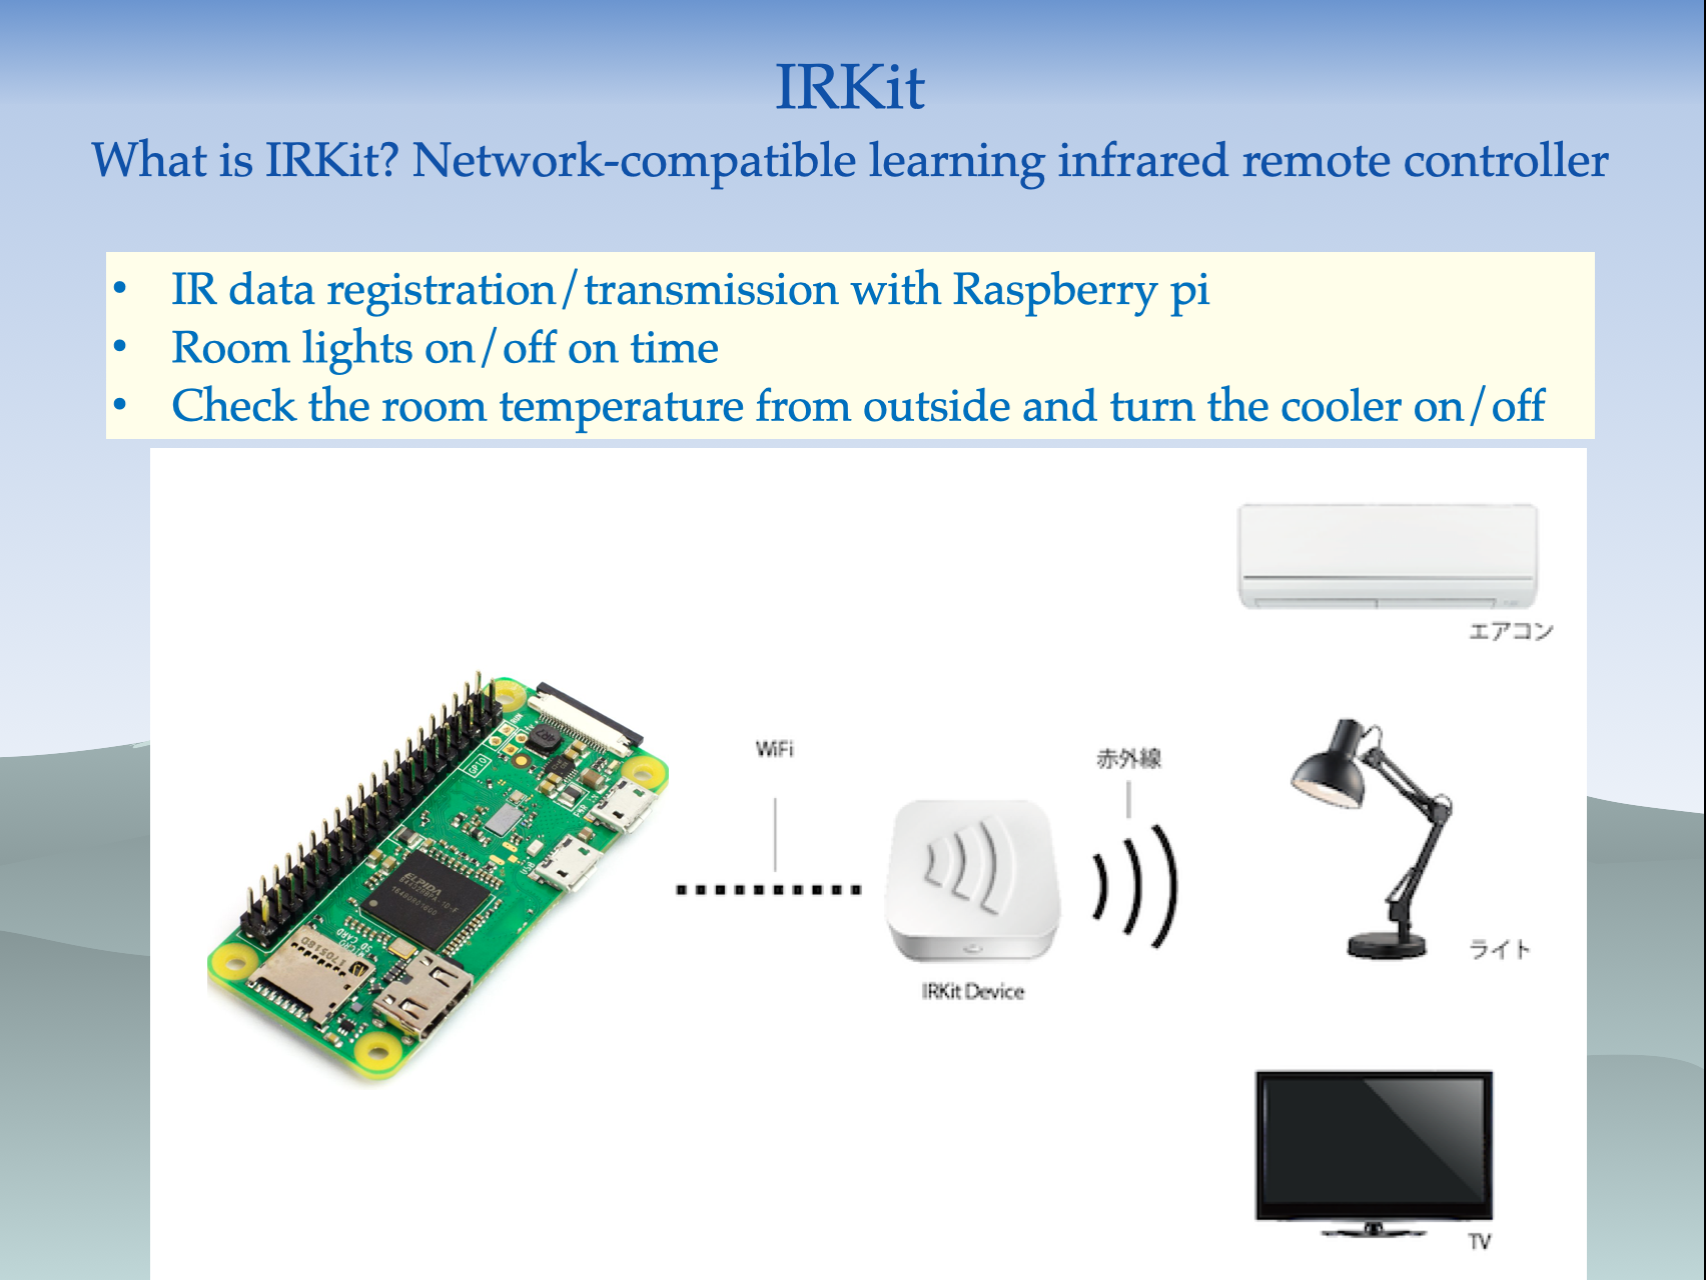 Operate IRKit with Raspberry pi